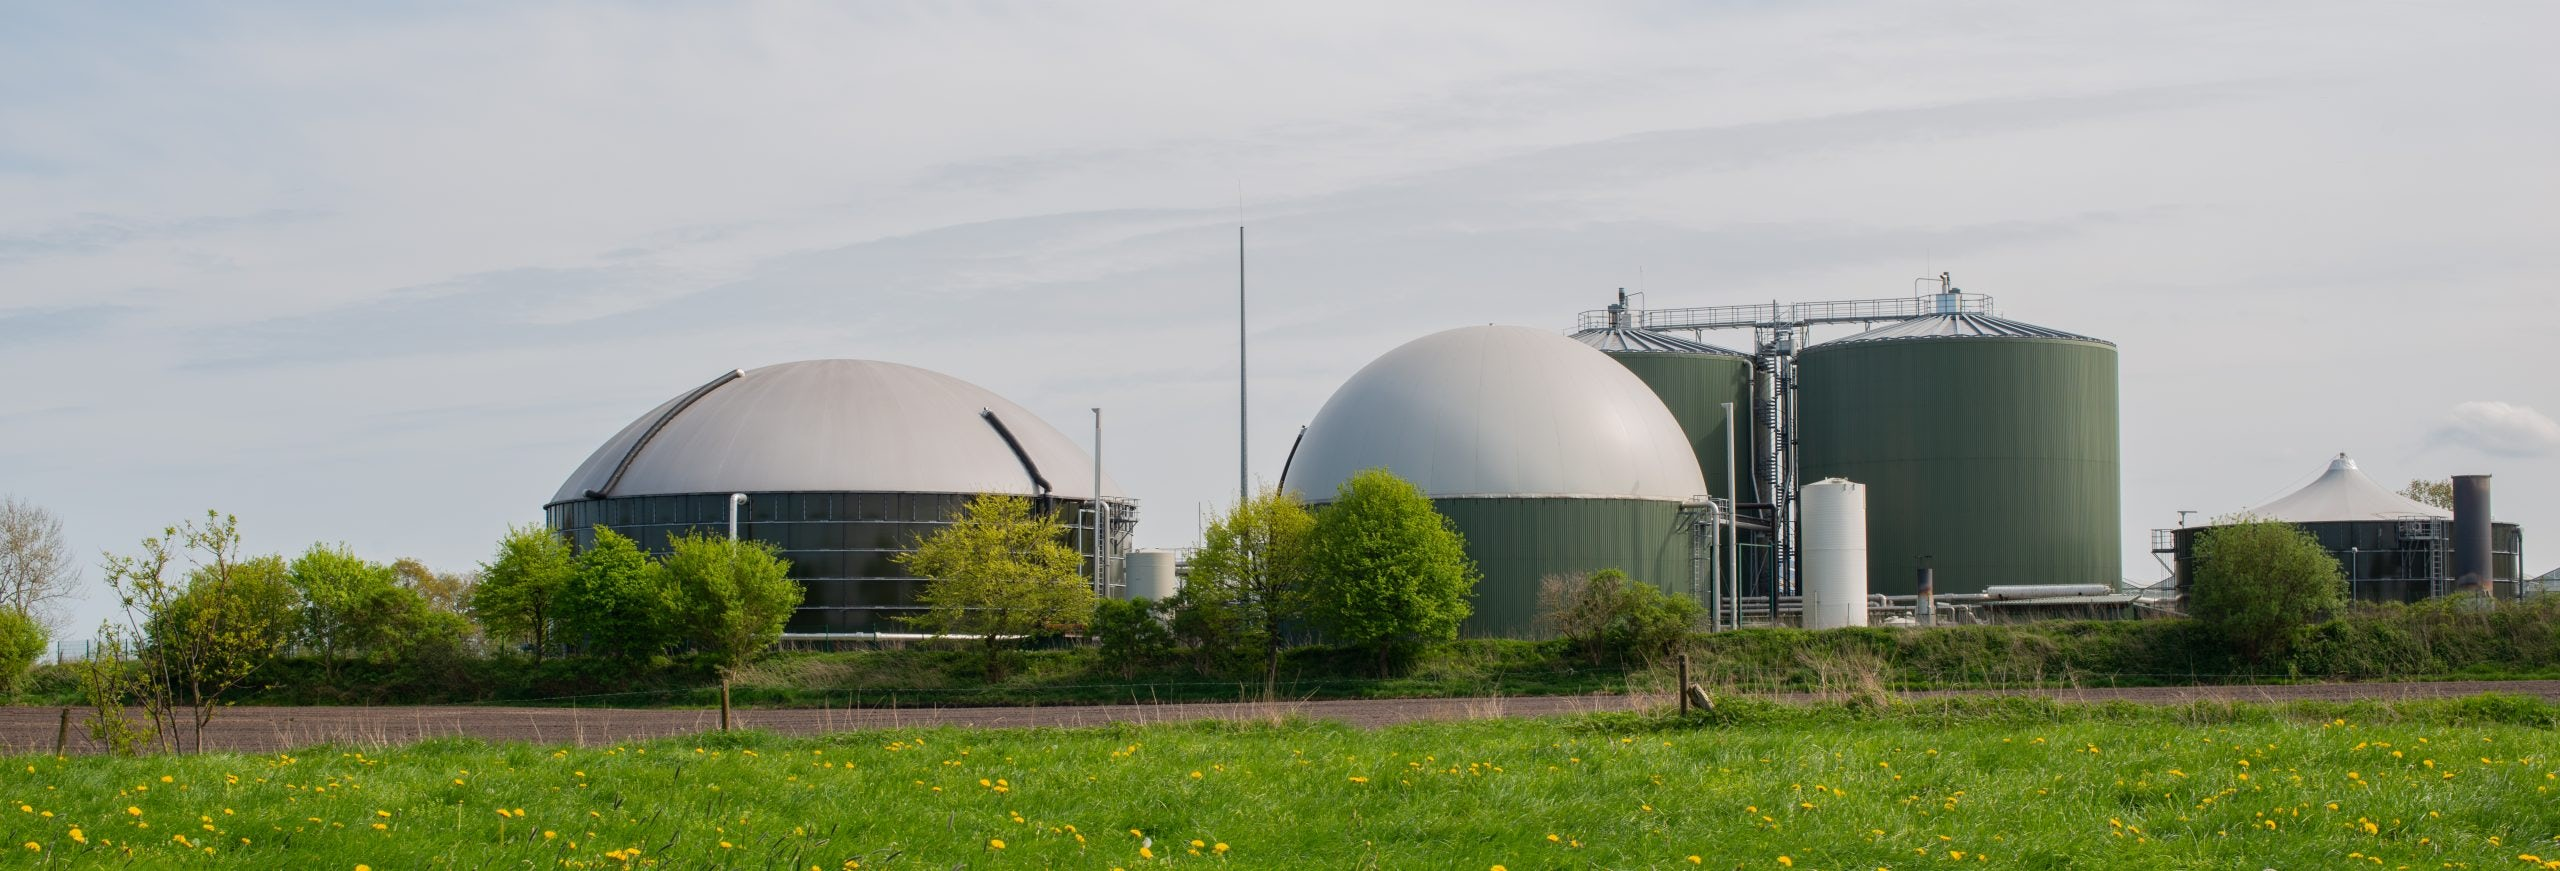 Biogas Production Equipment